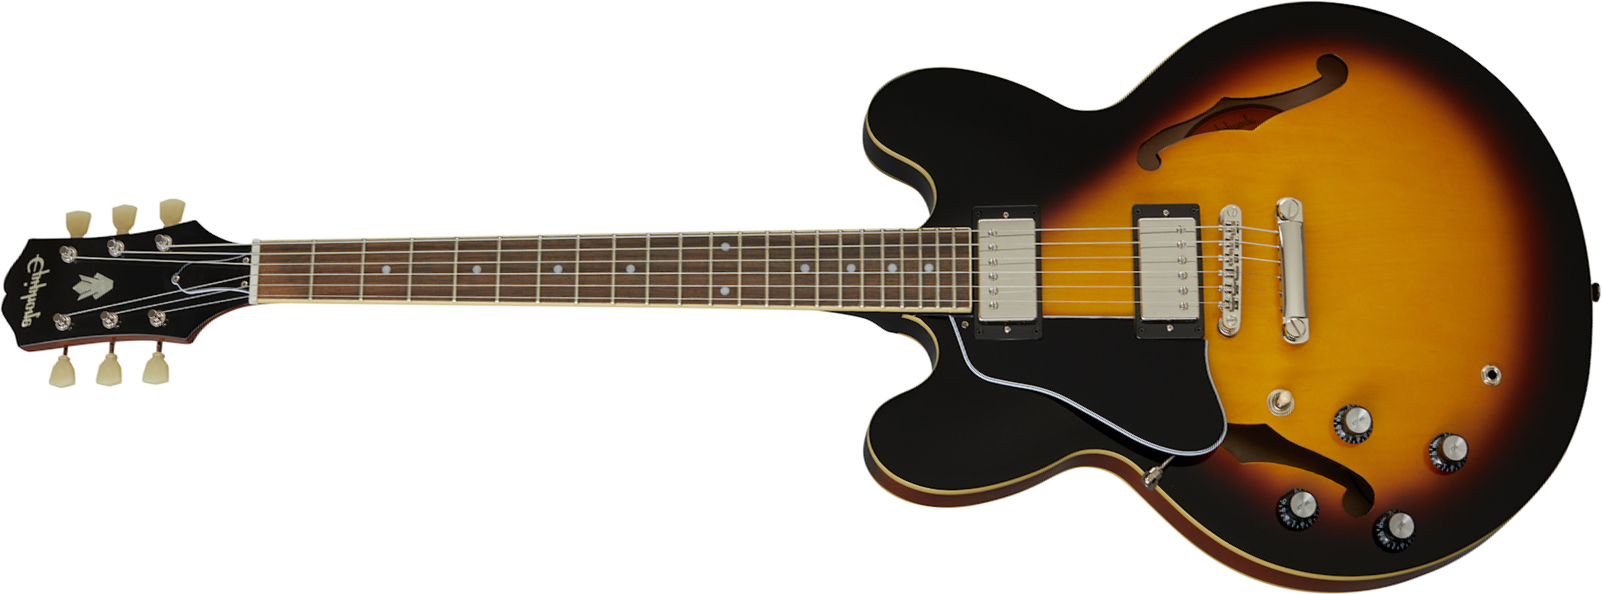 Epiphone Es-335 Lh Inspired By Gibson Original Gaucher 2h Ht Rw - Vintage Sunburst - Left-handed electric guitar - Main picture